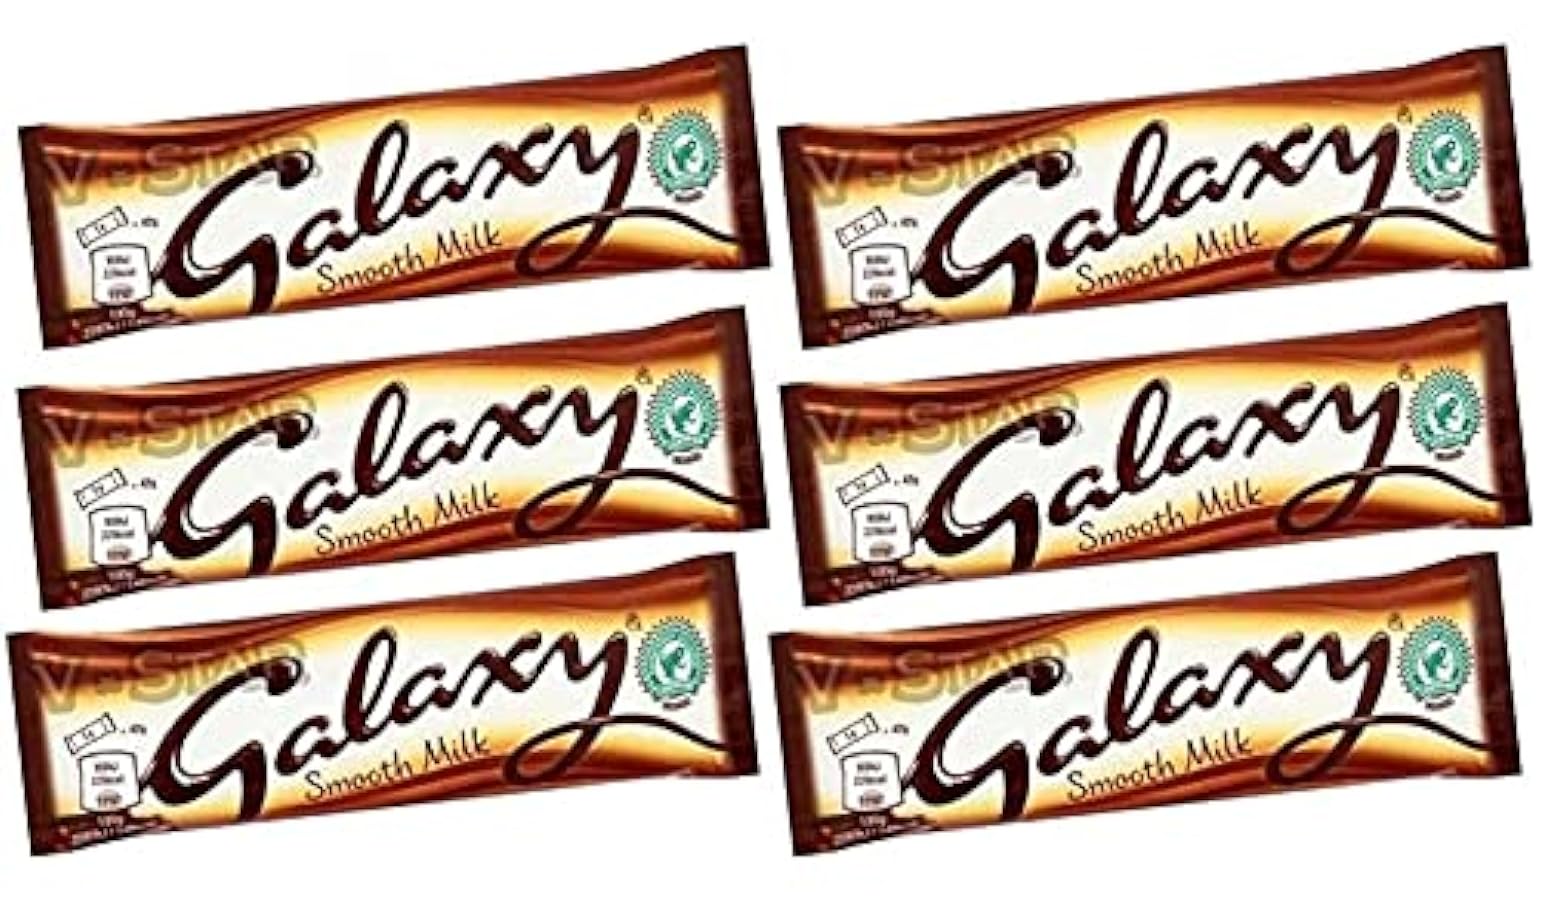 FULL BOX OF GALAXY STANDARD CHOCOLATE BARS (GALAXY SMOOTH MILK (24 x 42g)) 690105533